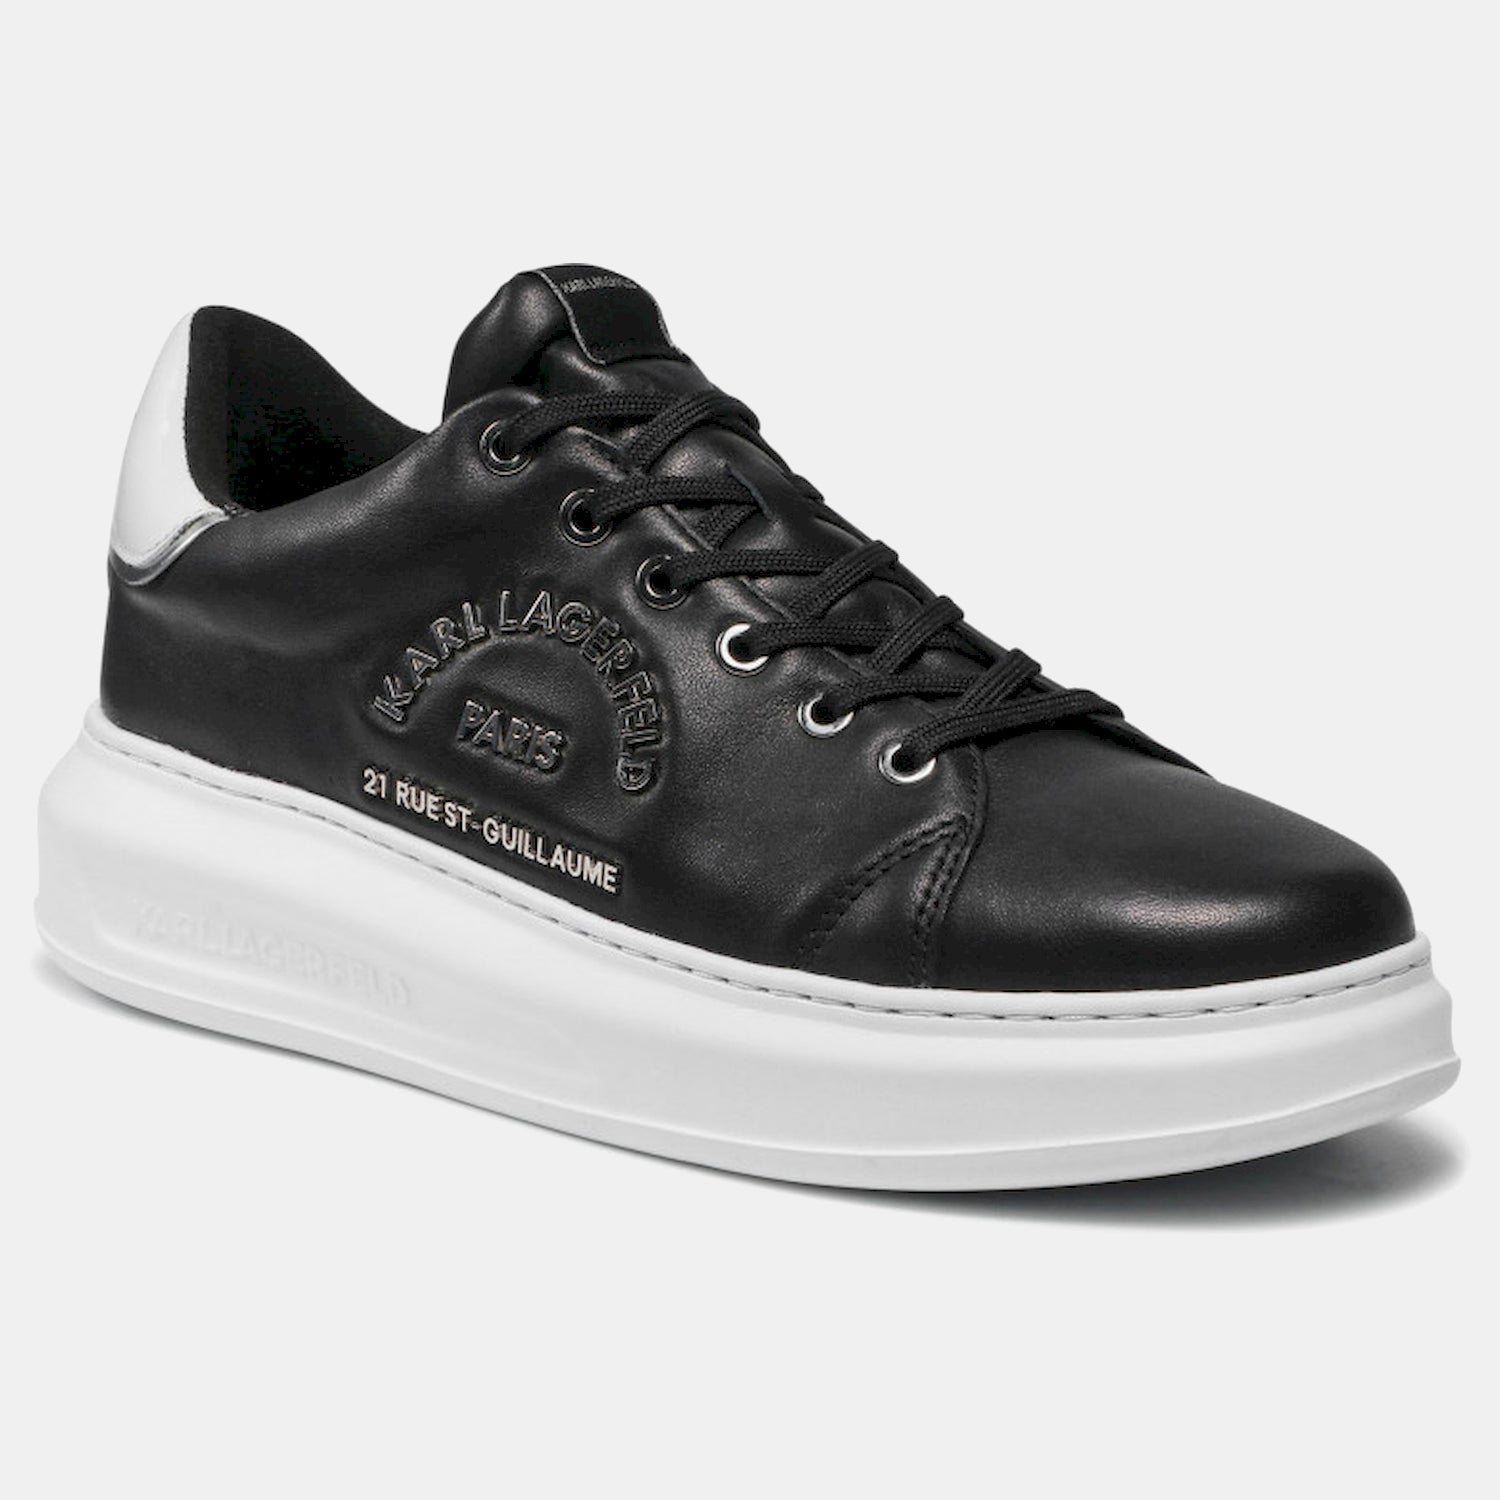 Karl Lagerfeld Sapatilhas Sneakers Shoes Kl52539 Black Preto_shot1